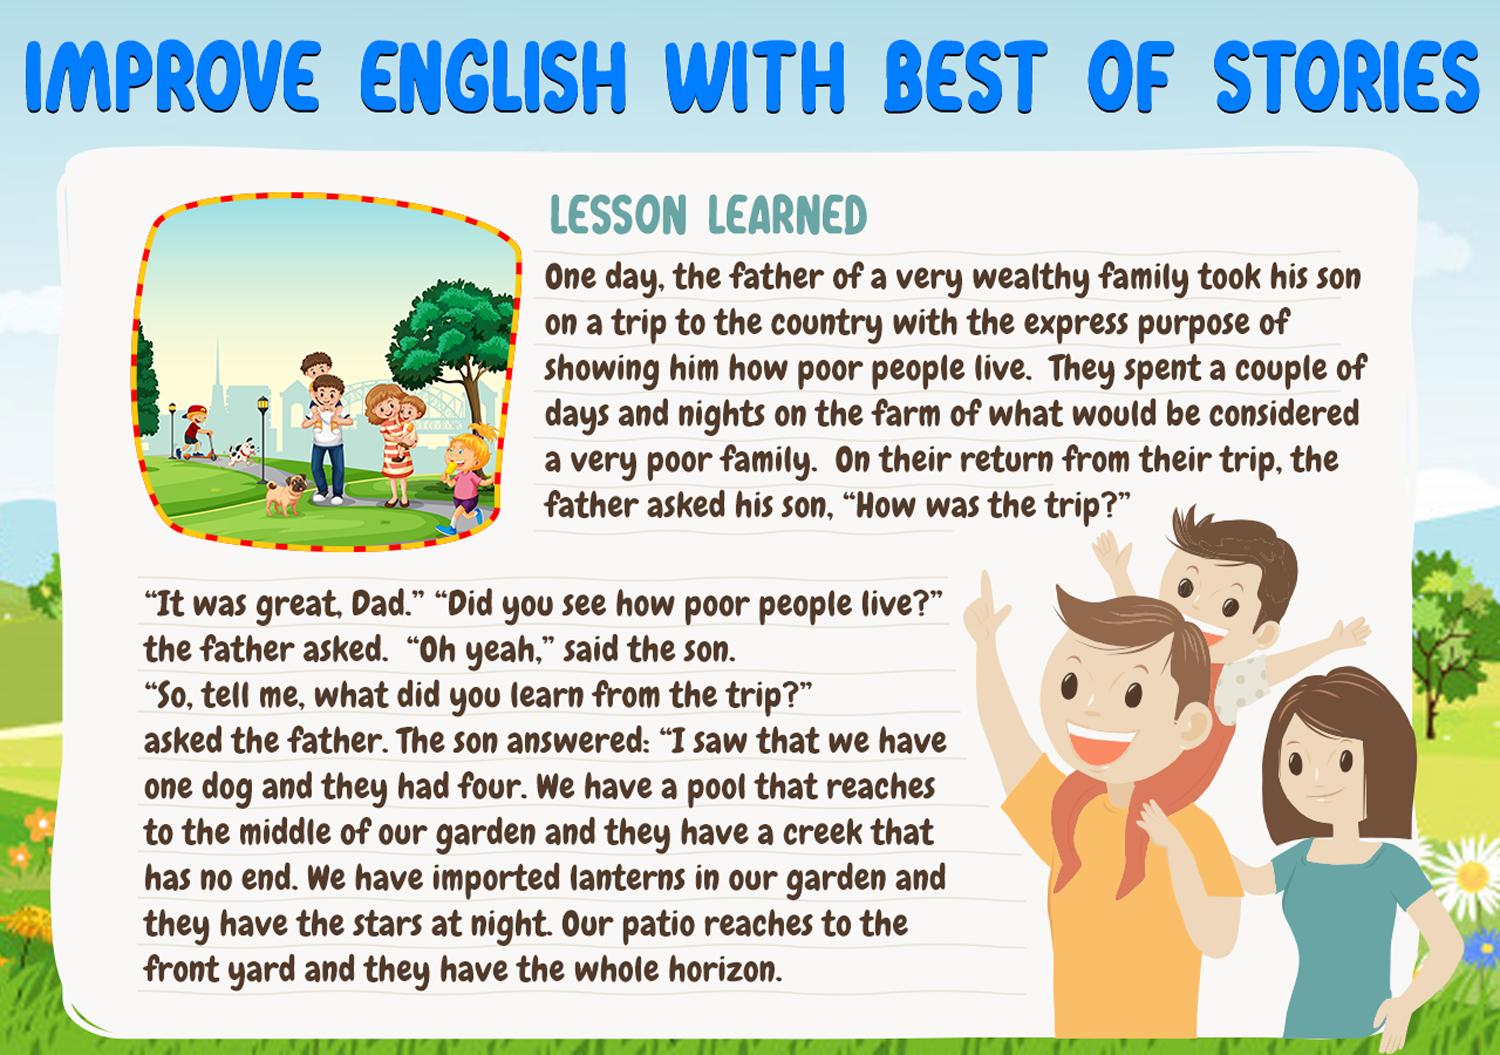 Short stories 2. Stories in English. English short stories. Stories for Kids. Stories for children in English.